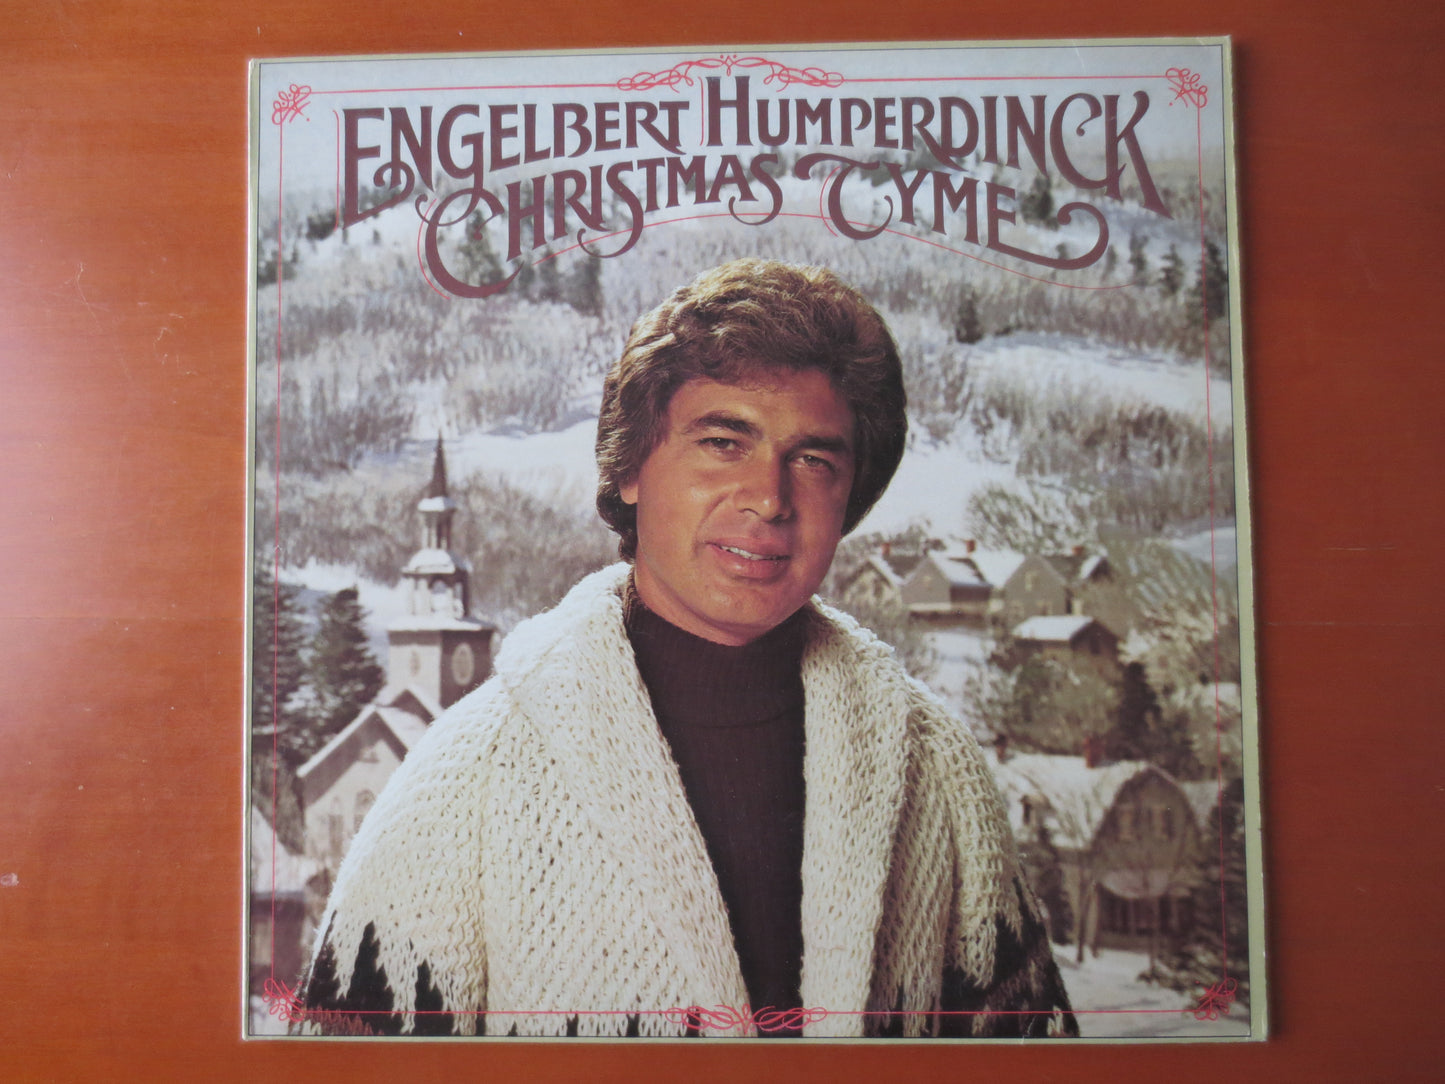 ENGELBERT HUMPERDINCK, CHRISTMAS Album, Christmas Songs, Christmas Record, Christmas Vinyl, Christmas Lp, Lps, 1977 Records